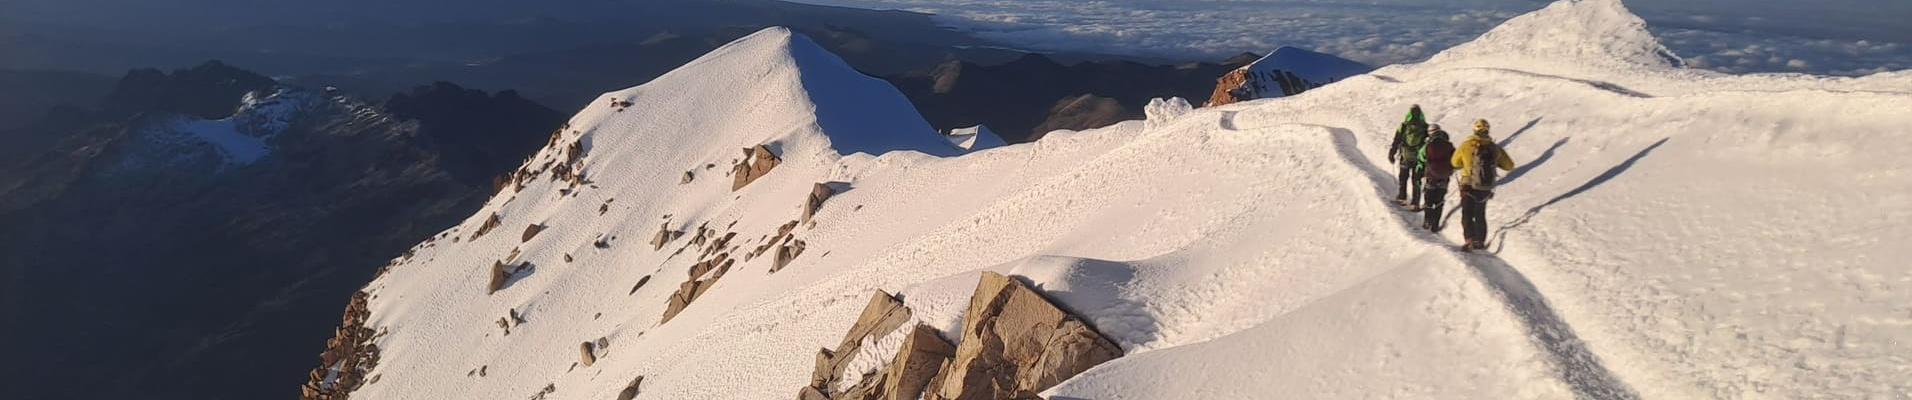 alpinistes-huayna-potosi-bolivie